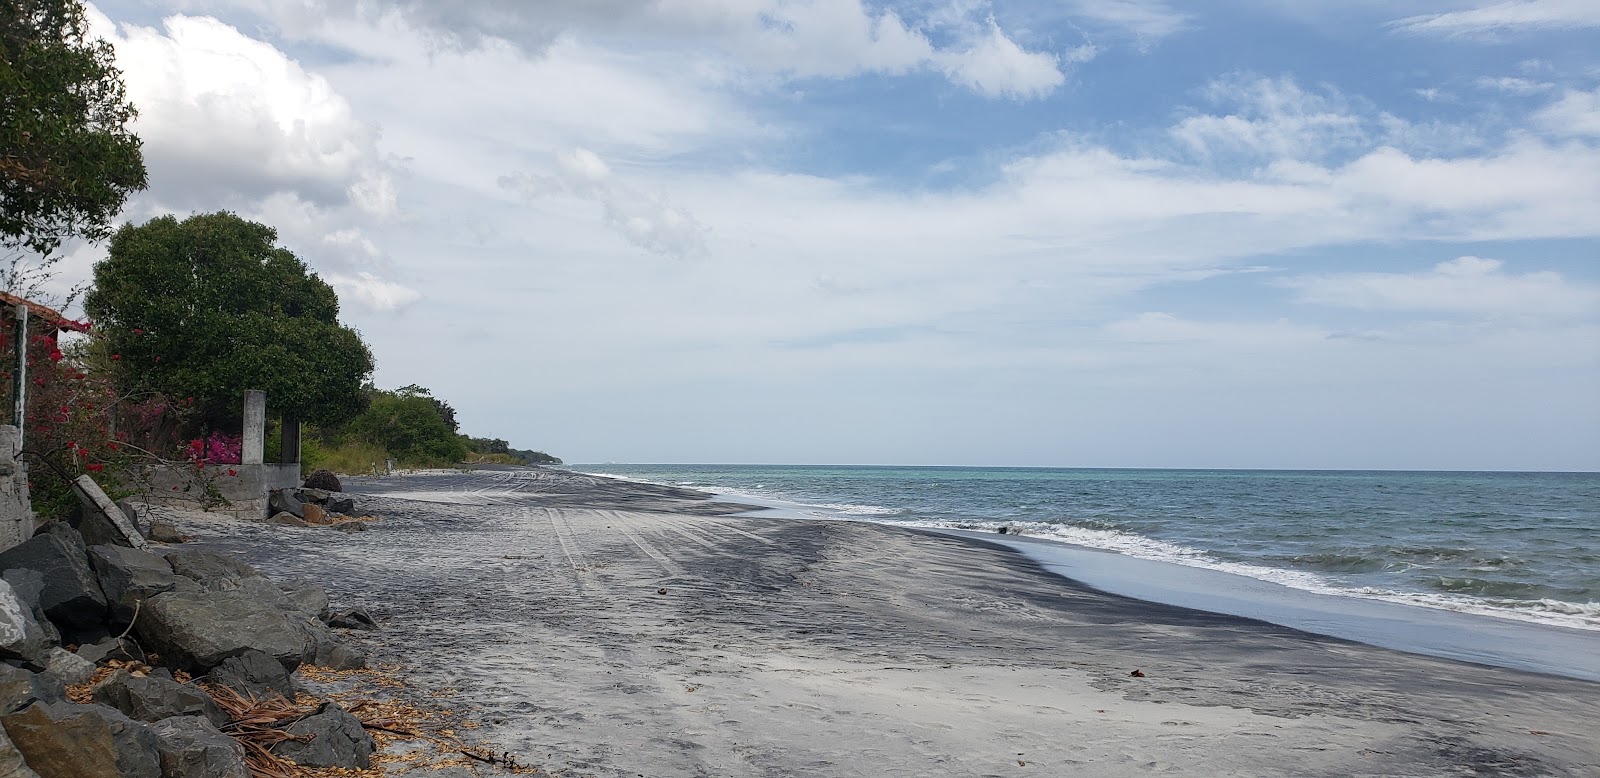 Foto di Juan Hombron Beach con una superficie del sabbia grigia